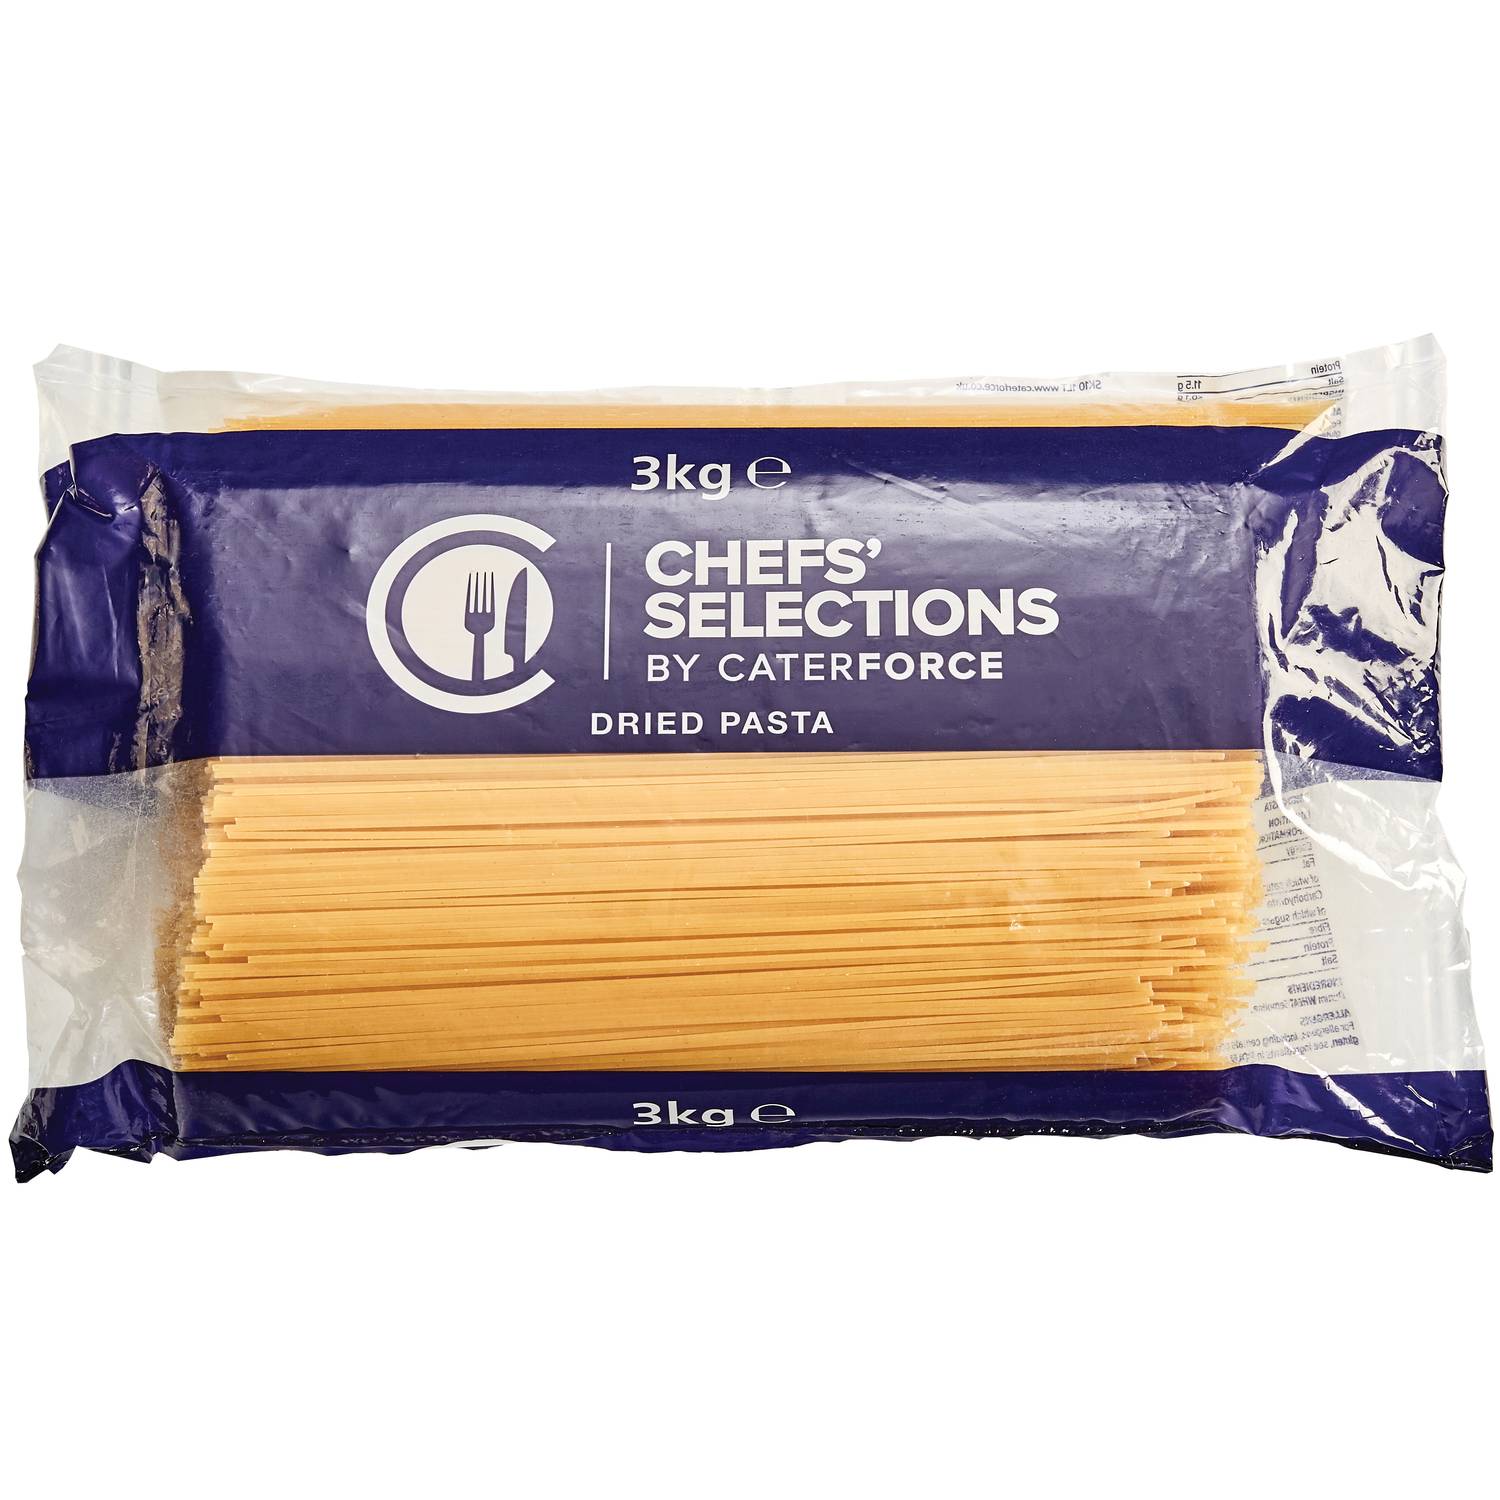 Chefs’ Selections Spaghetti Pasta (4 x 3kg)